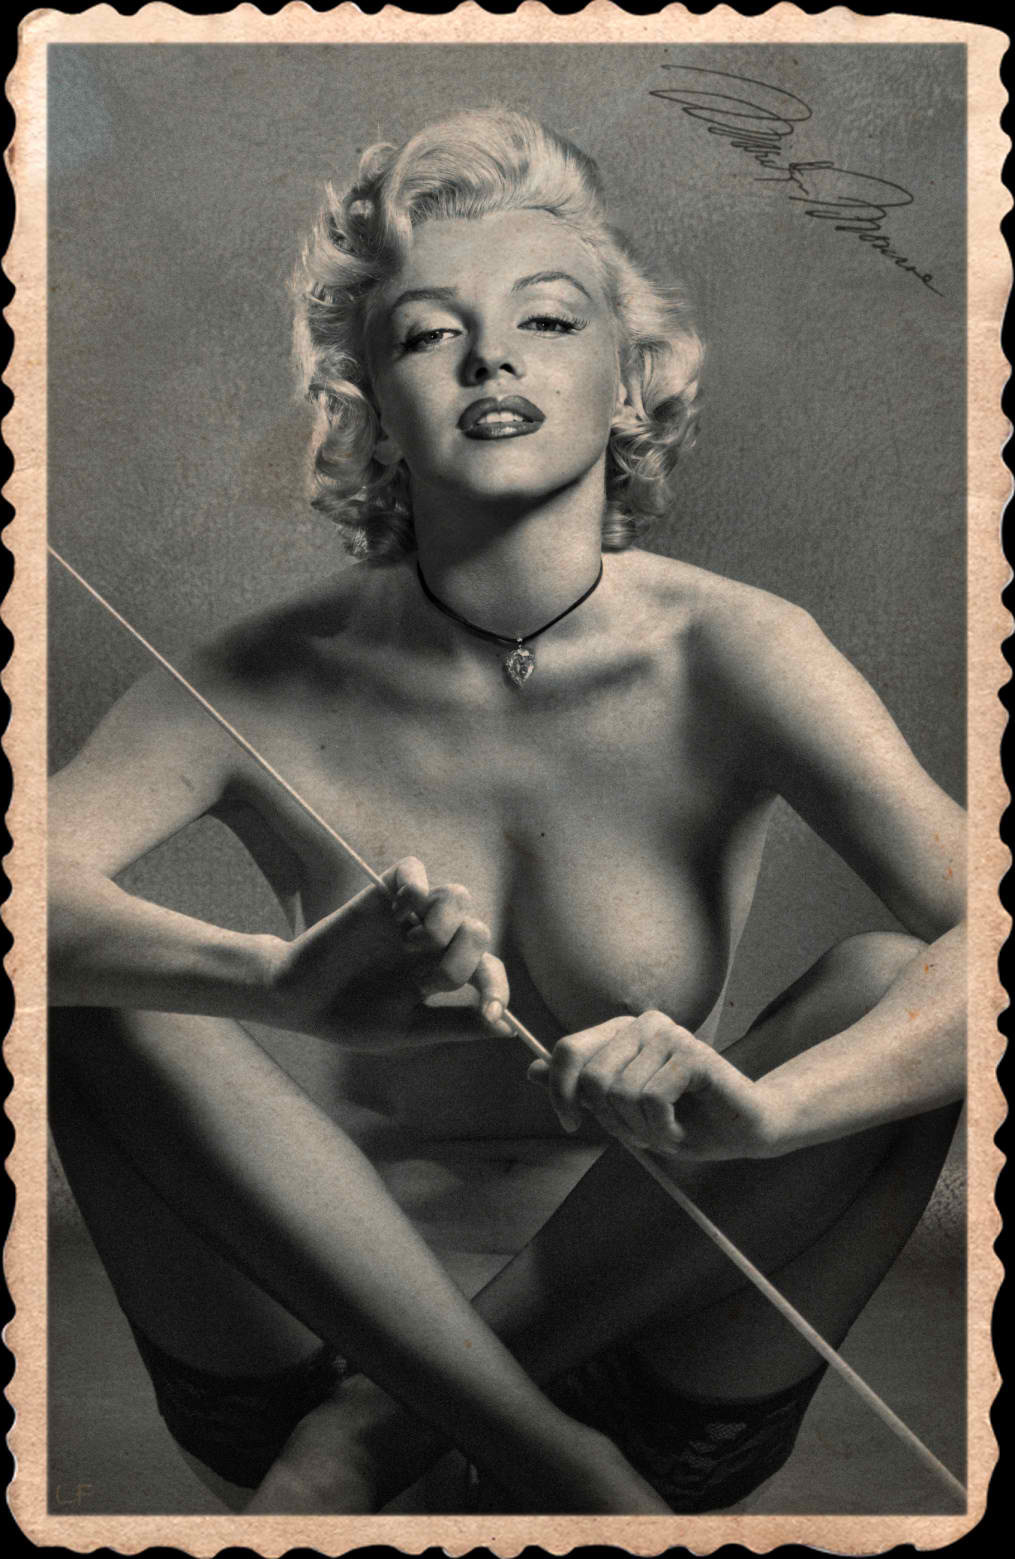 Hugh Hefner To Be Buried Next To Marilyn Monroe, Original Playboy Cover Model